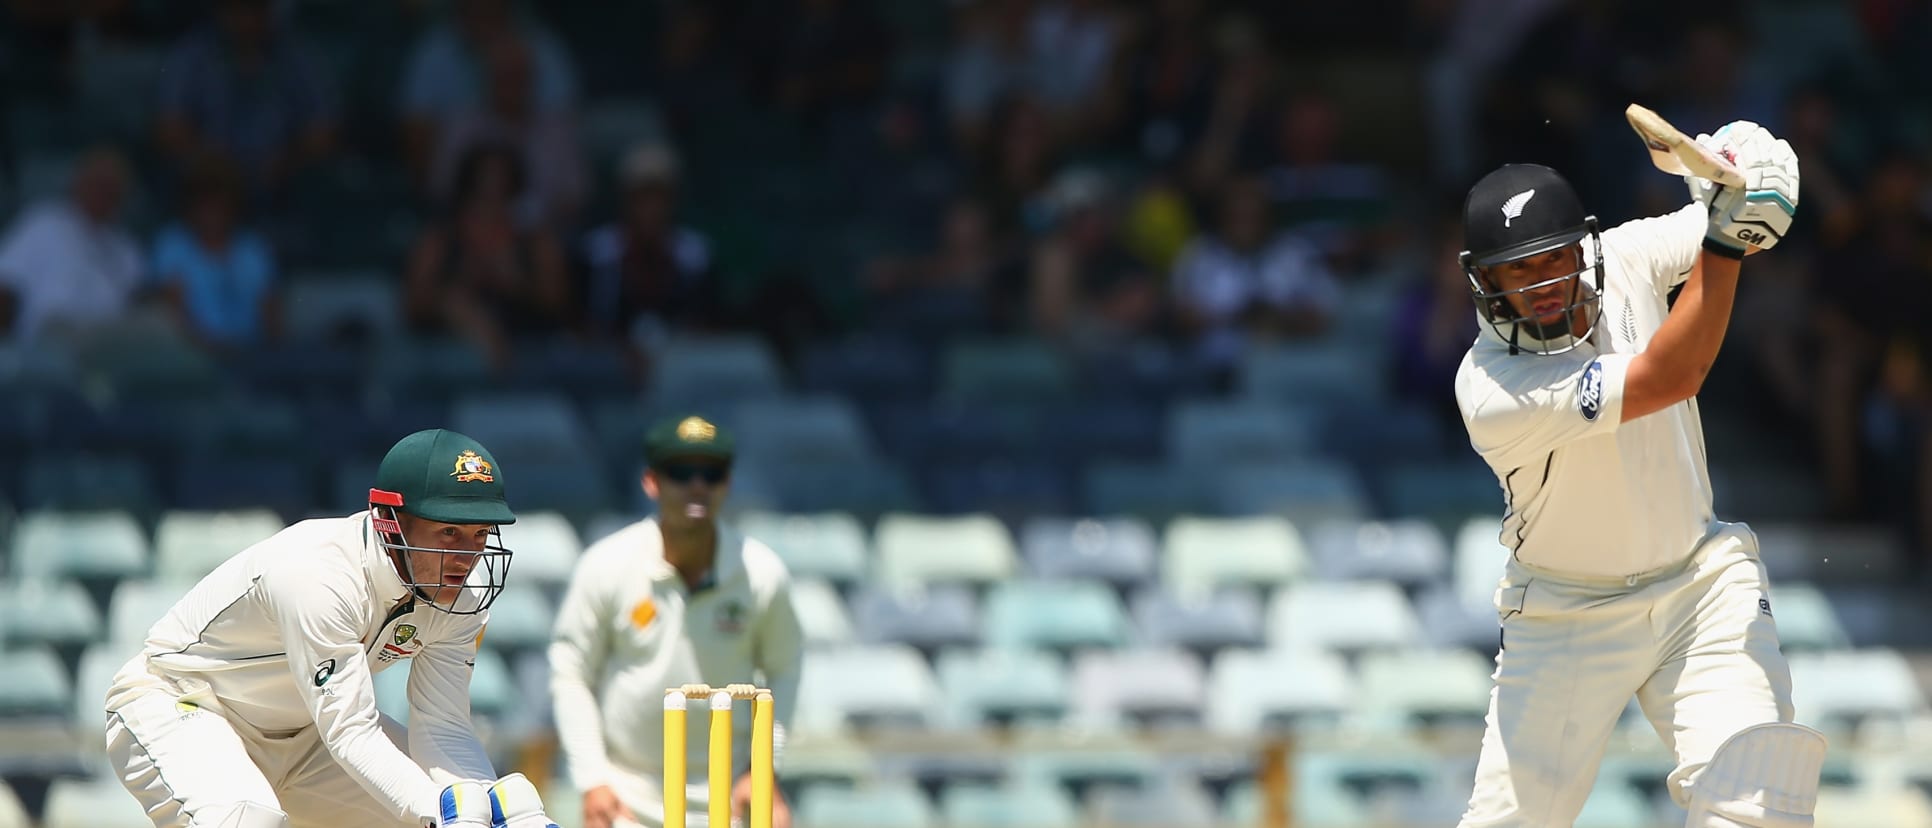 Taylor batting against Australia in Perth (2015)